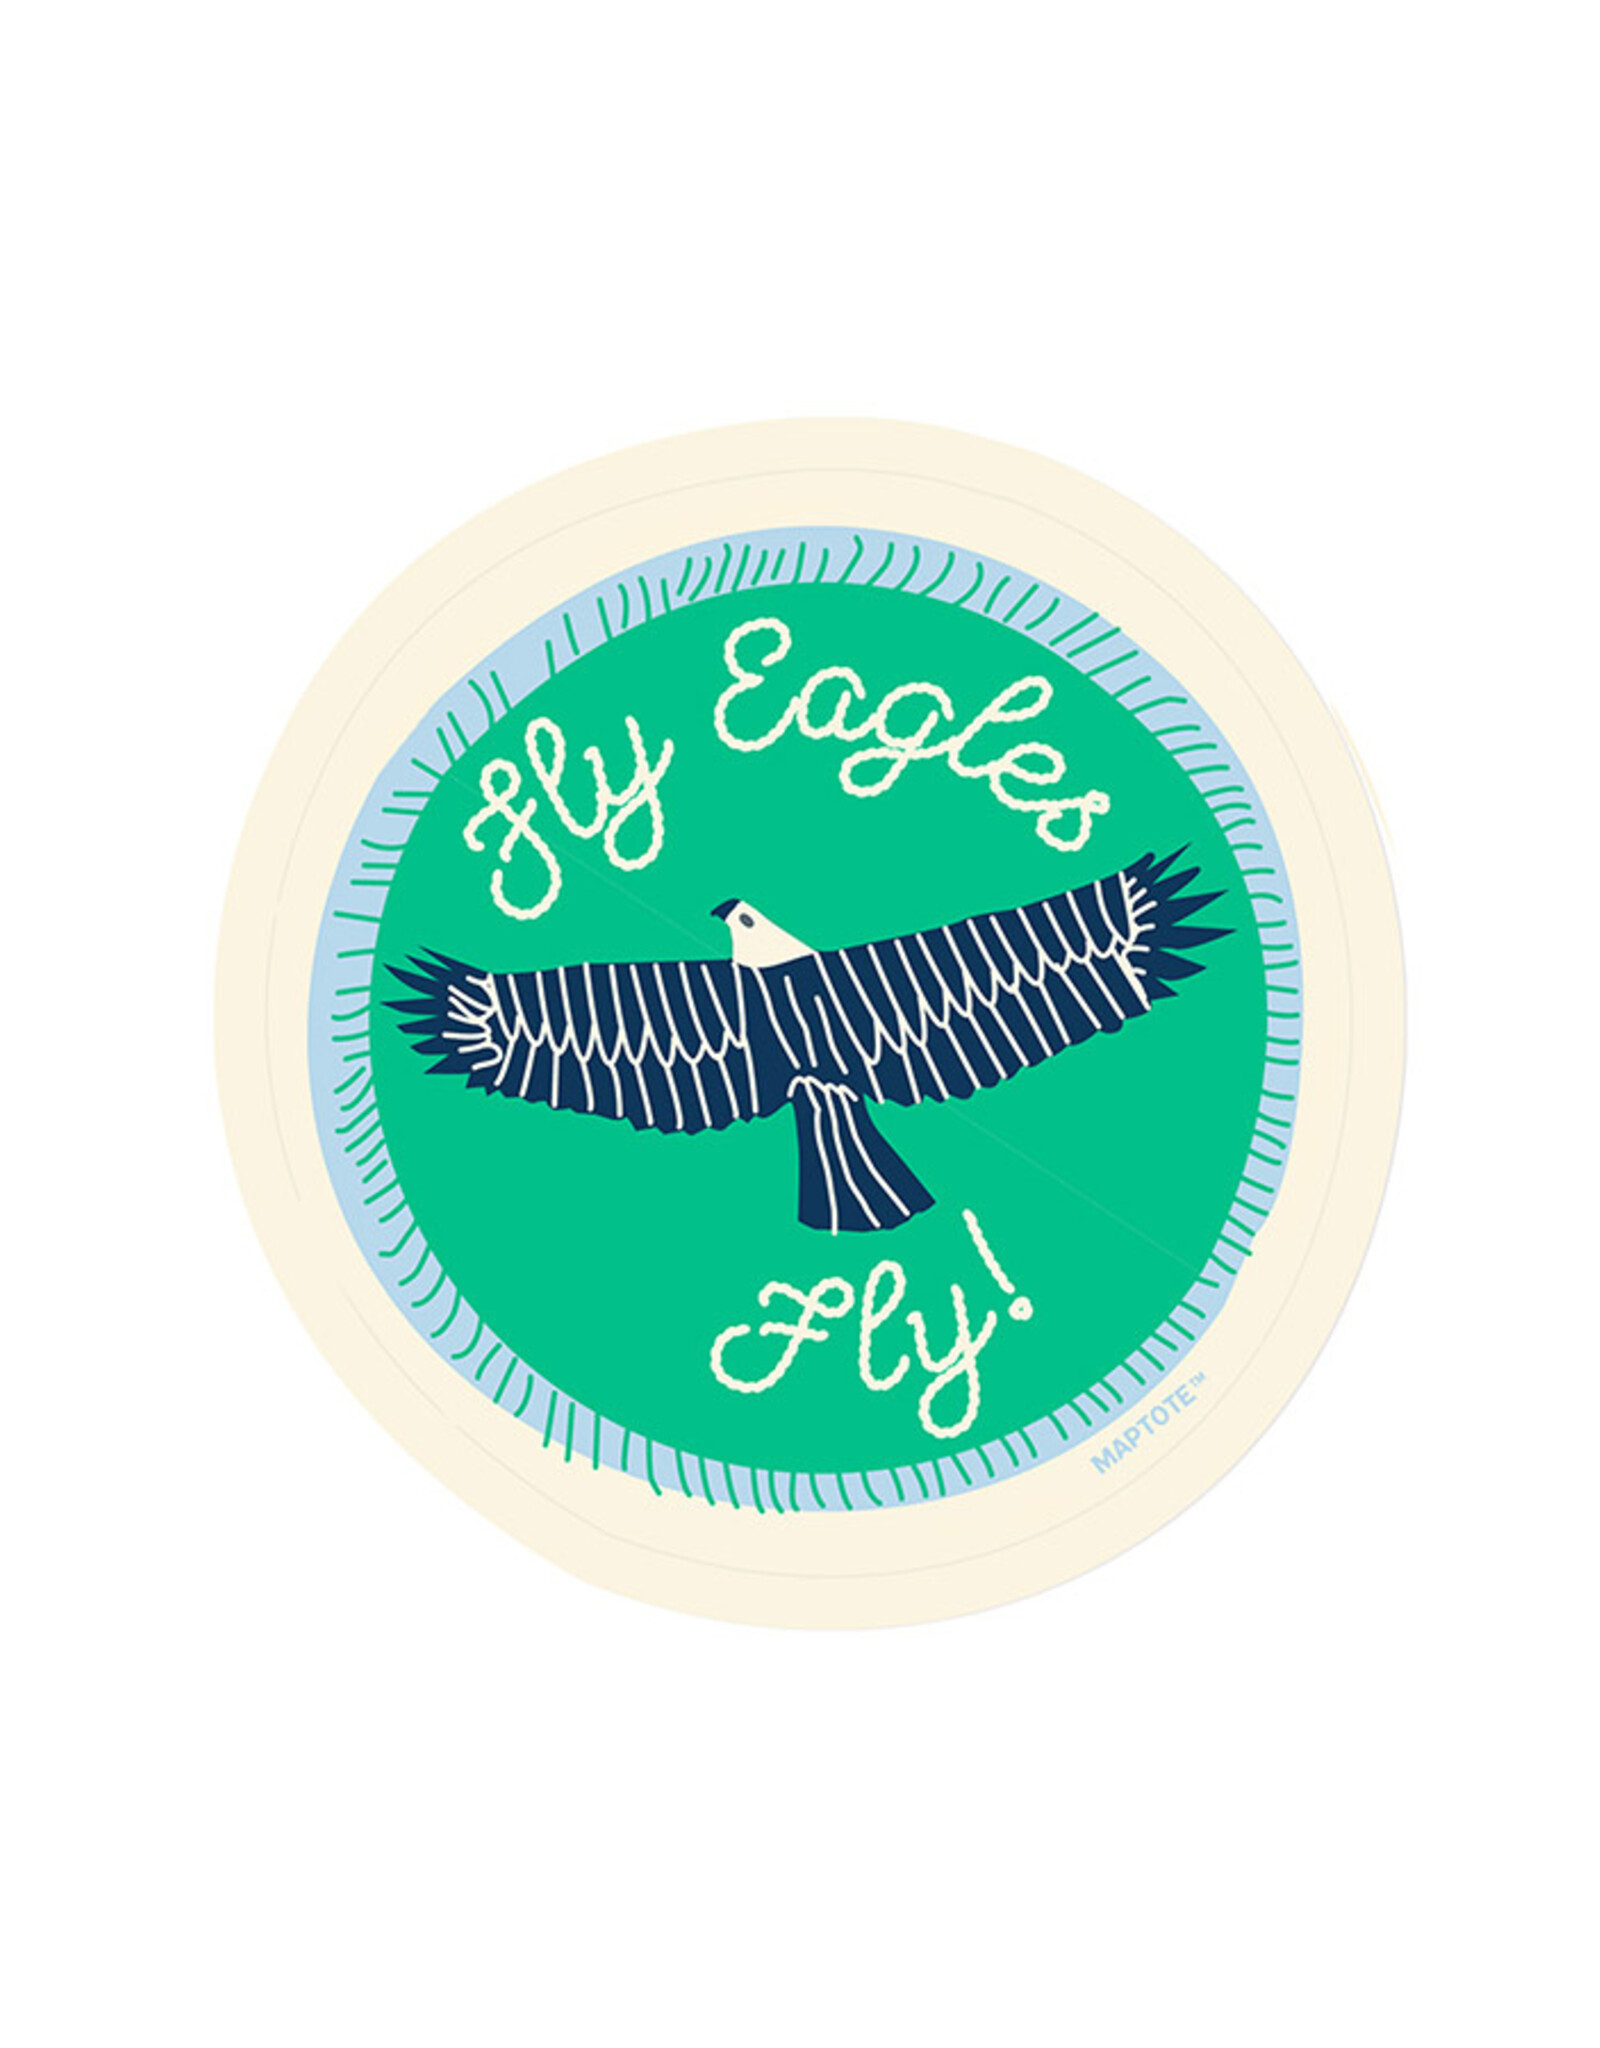 MapTote Sticker: Philadelphia Fly Eagles Fly